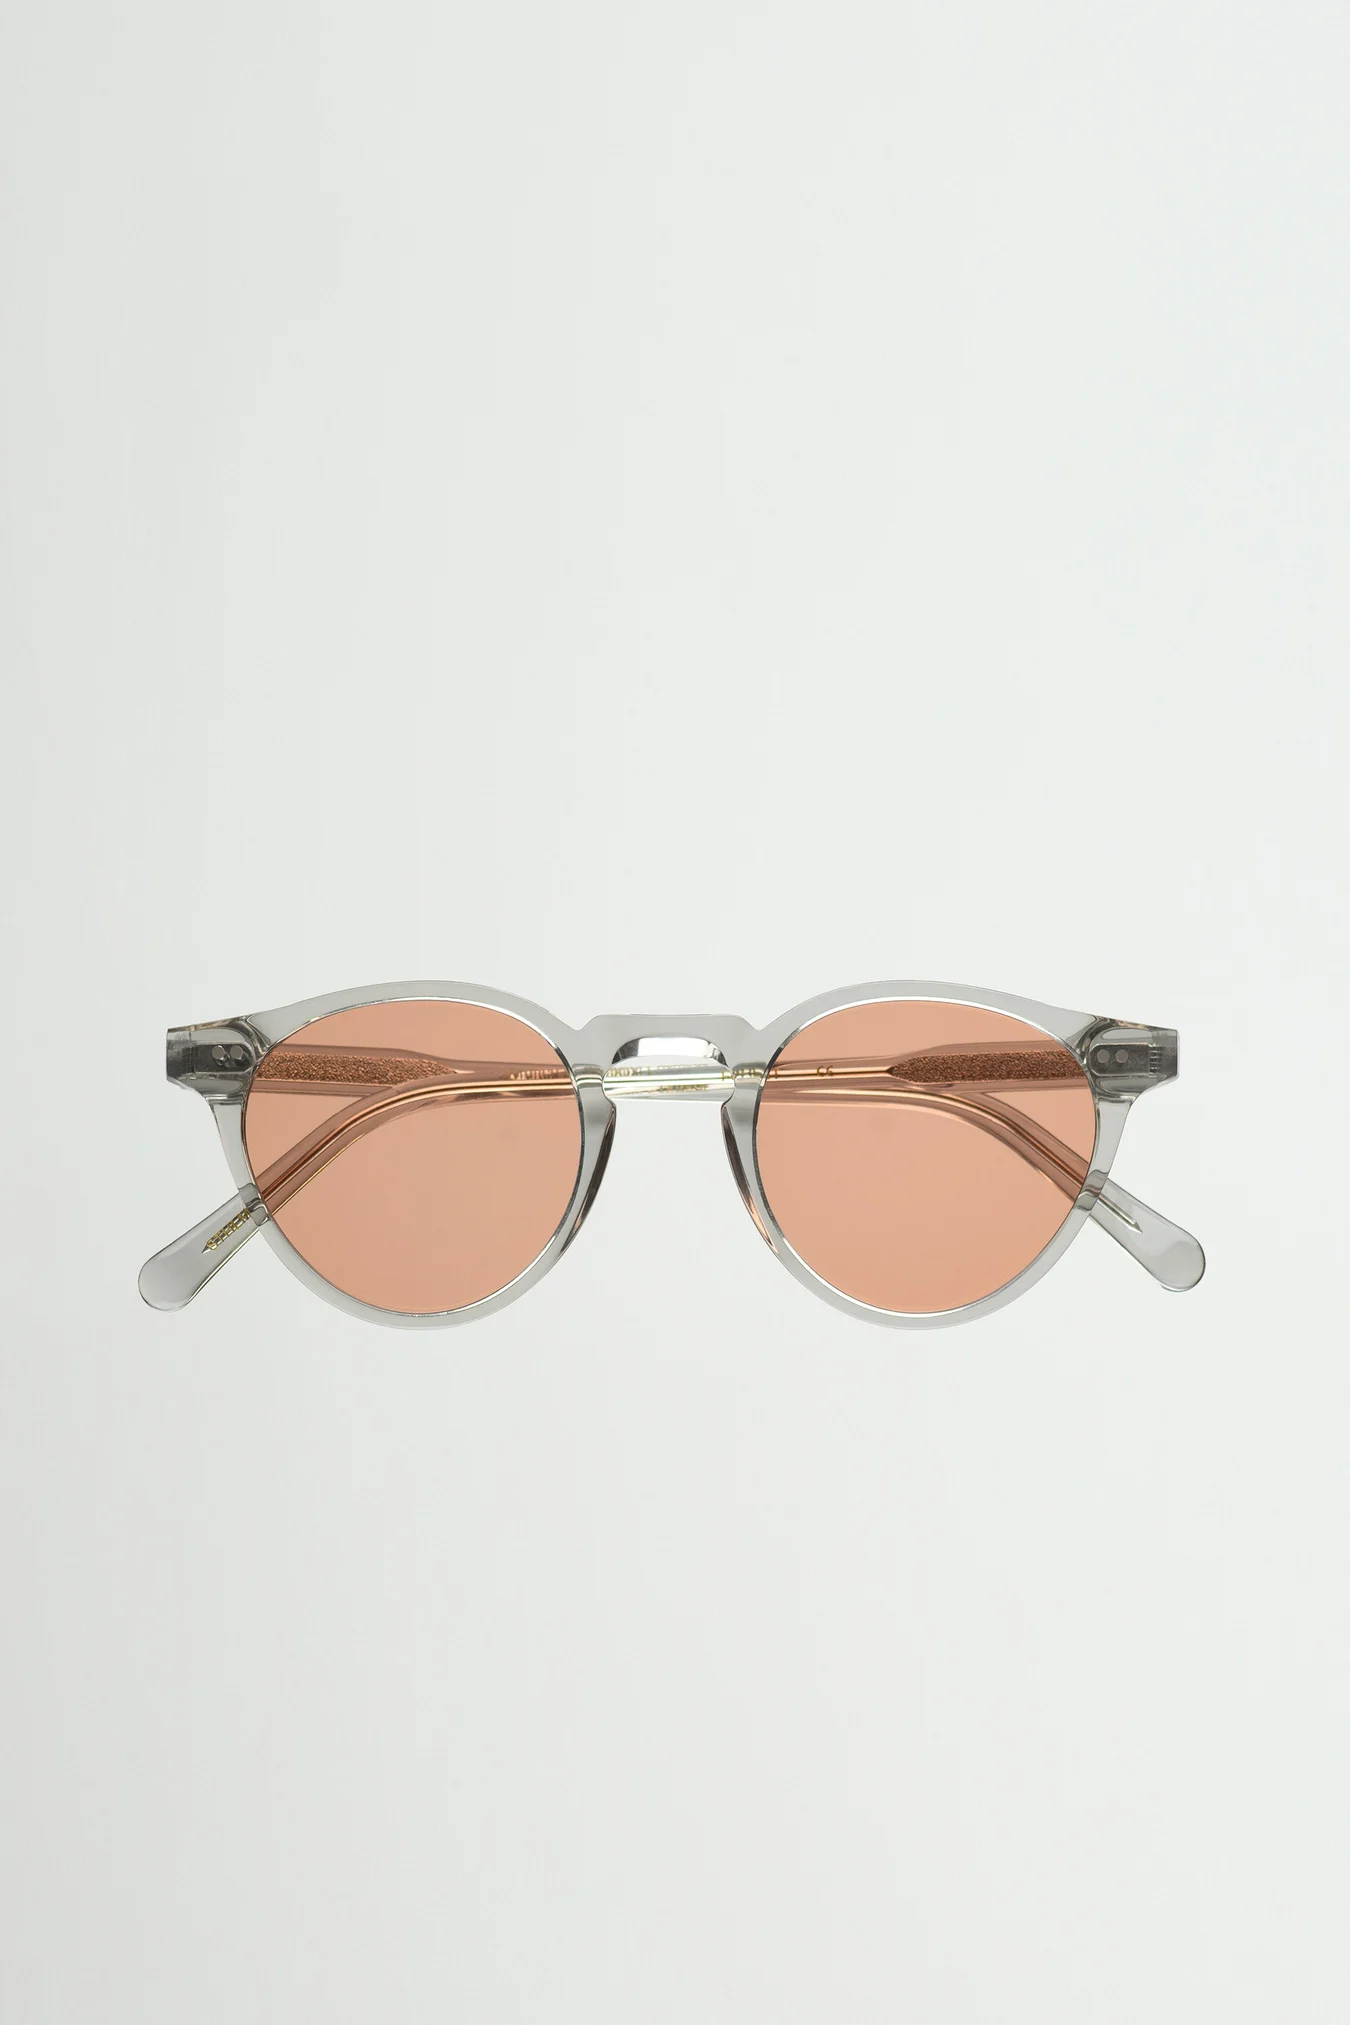 Monokel Eyewear Forest Grey - Orange Solid Lens Sunglasses 